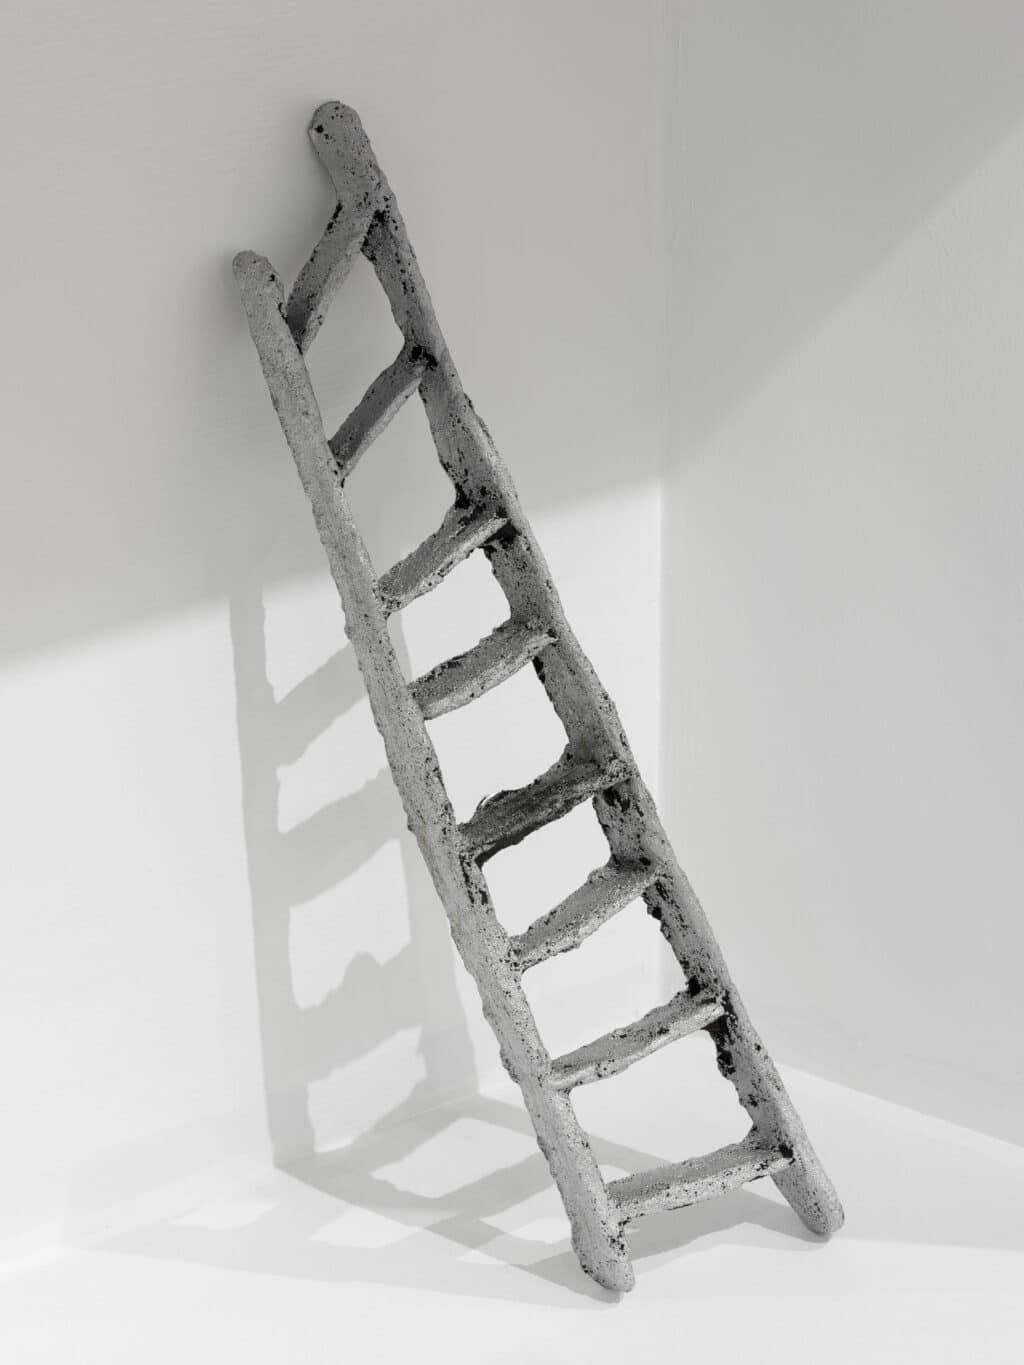 Link to Green Ladder, William Corwin artwork details